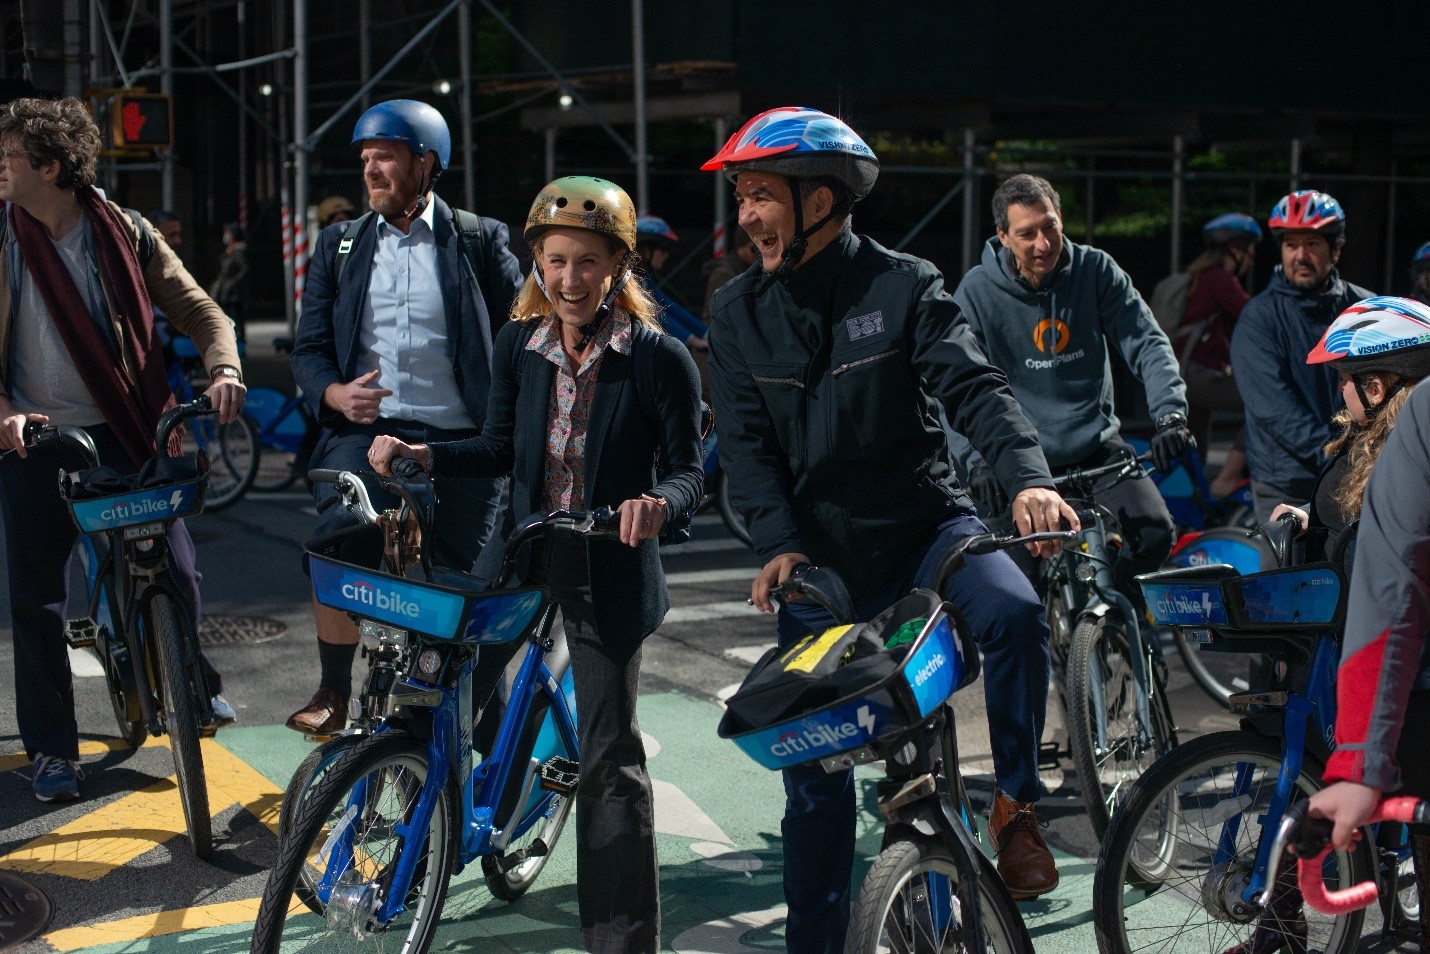 High-Level bike ride in New York to advance the New Urban Agenda